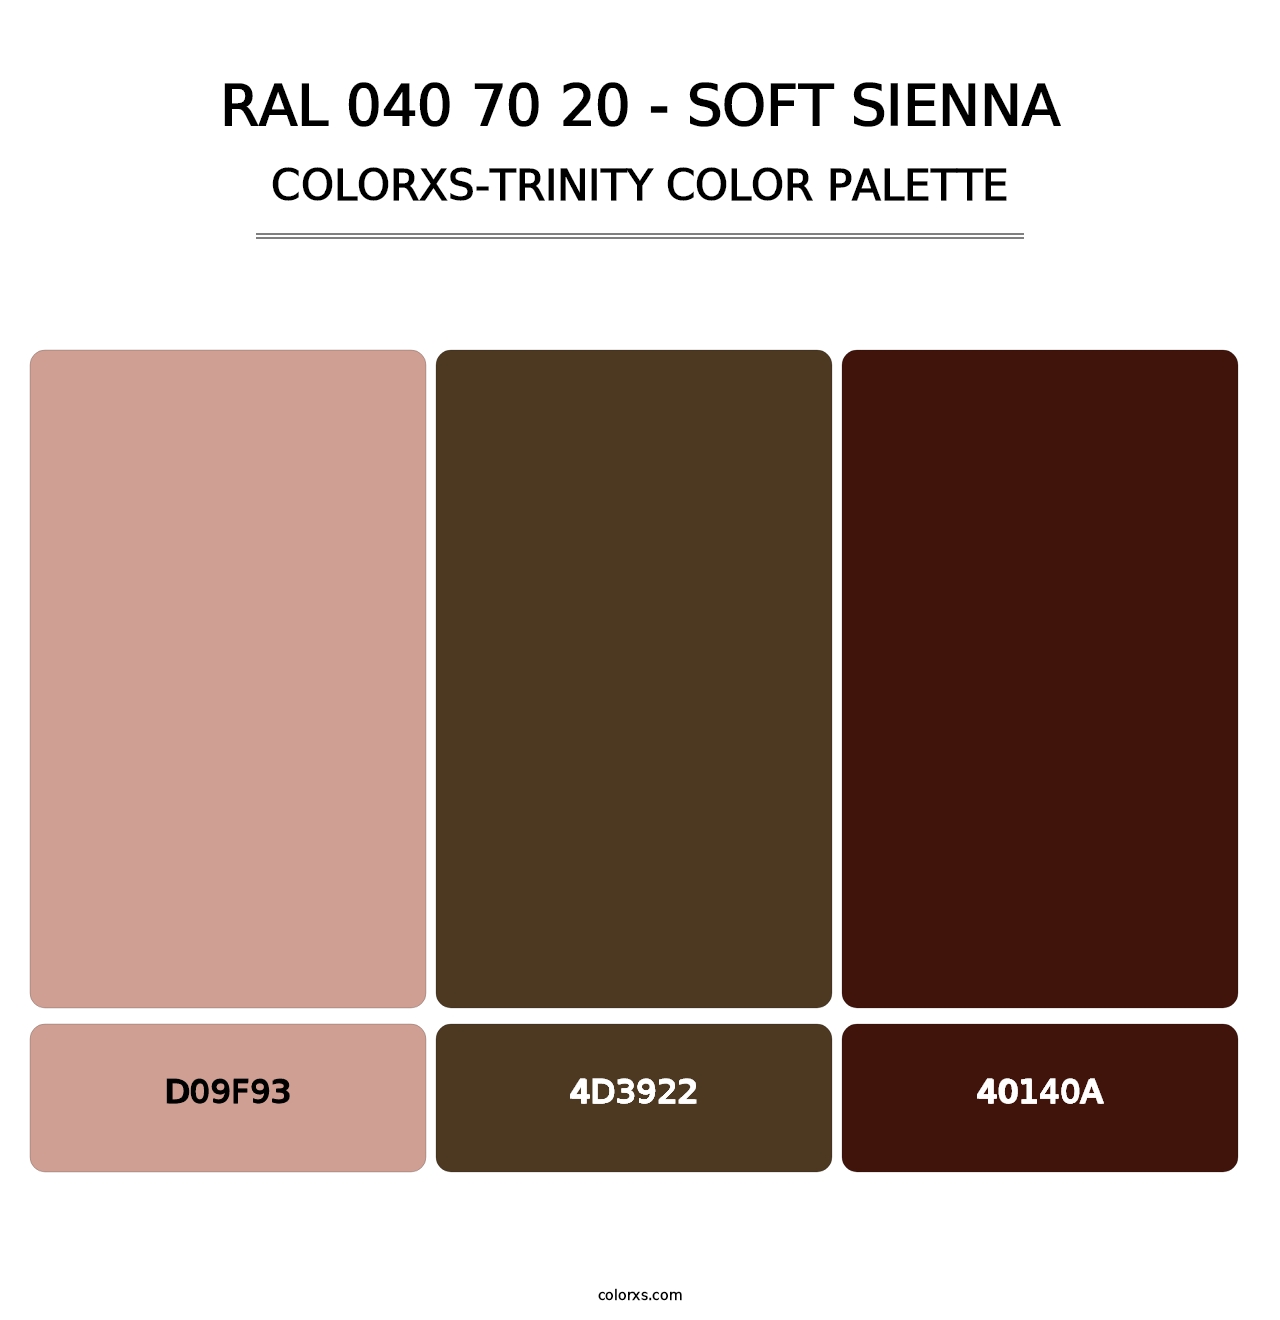 RAL 040 70 20 - Soft Sienna - Colorxs Trinity Palette